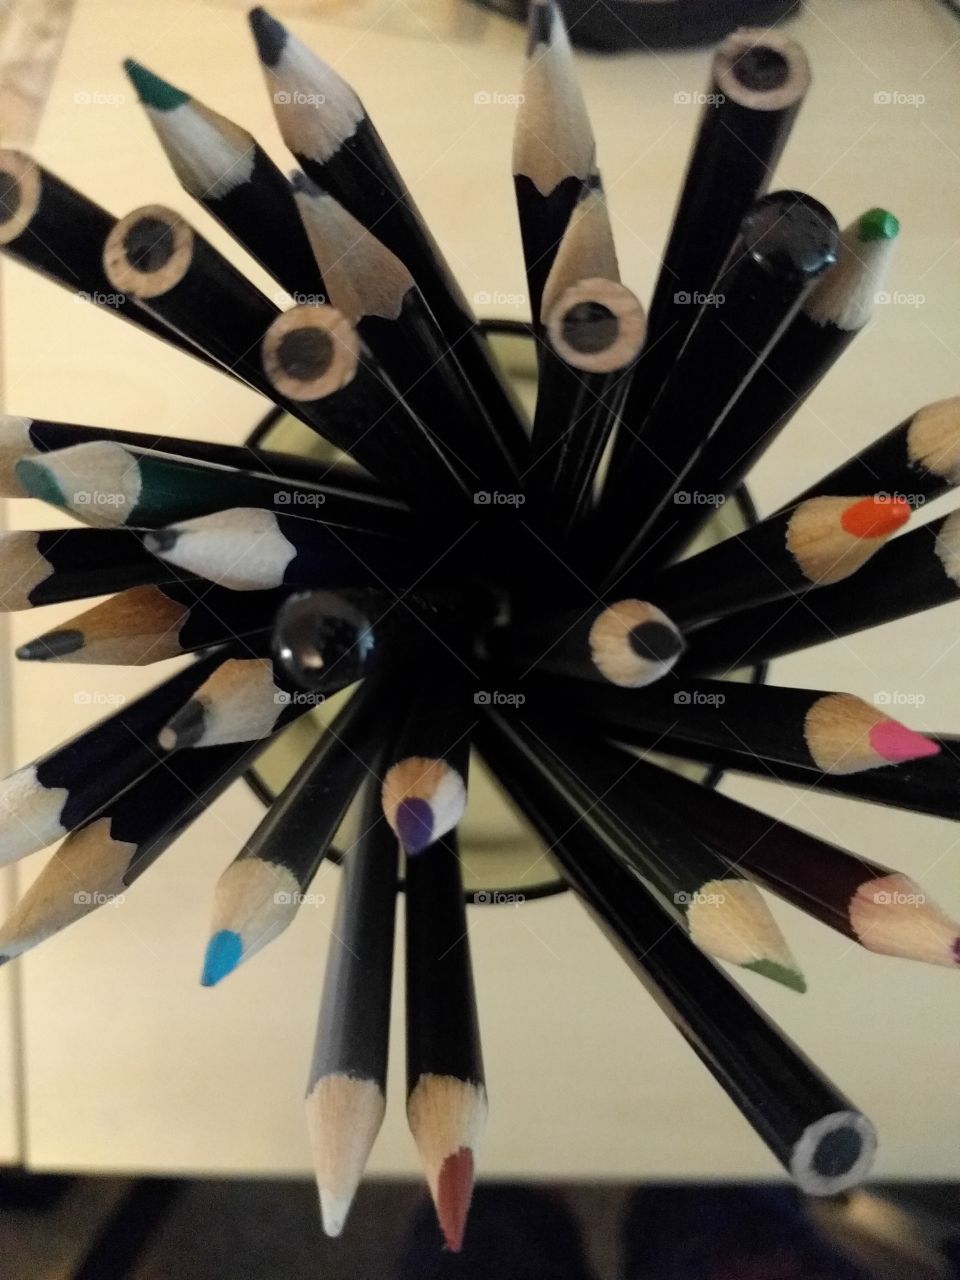 Art Pencils in a Wine Glass